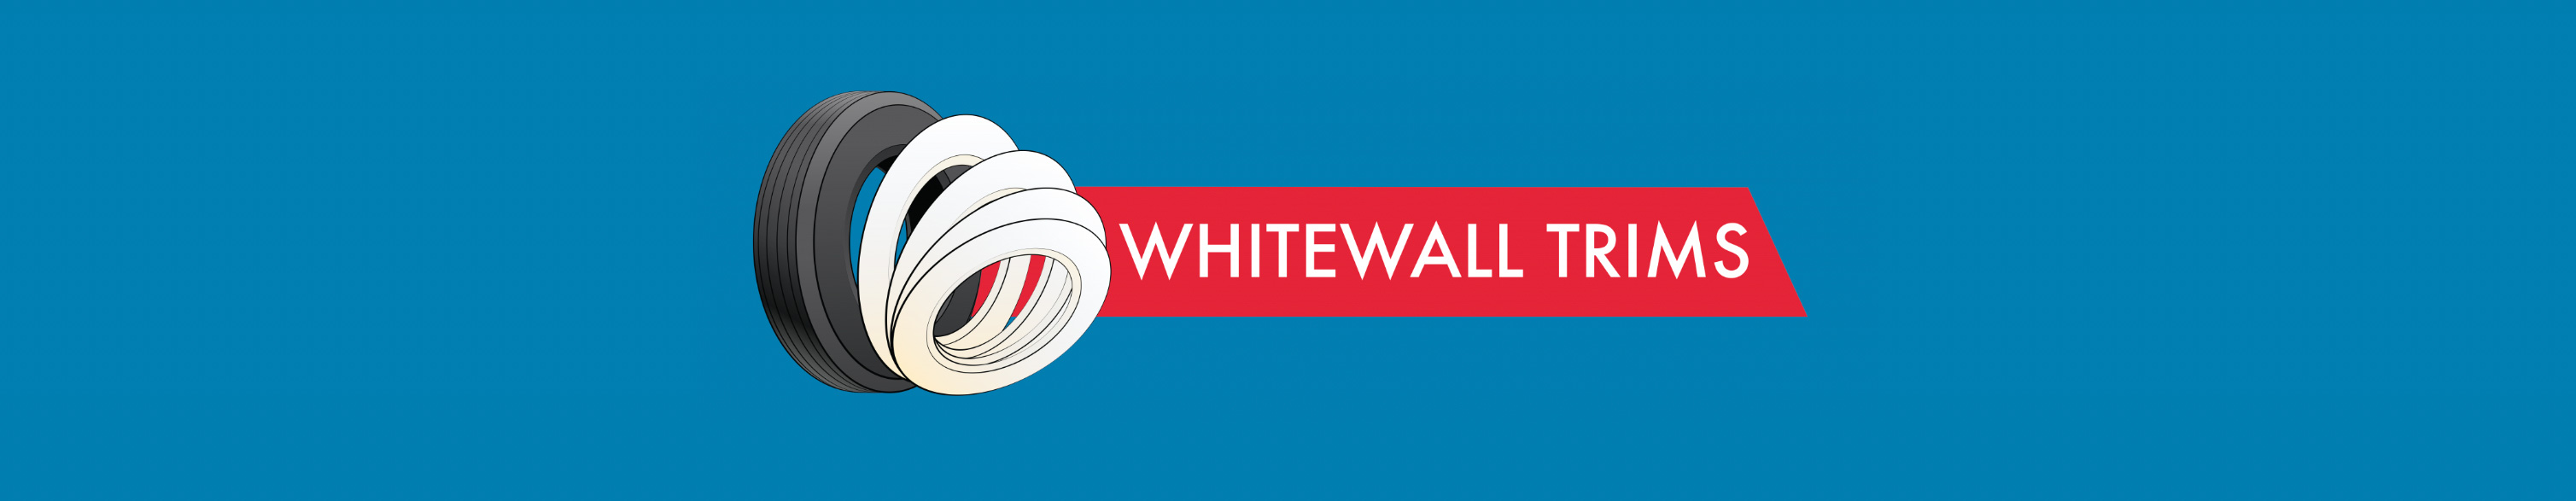 Whitewall trims